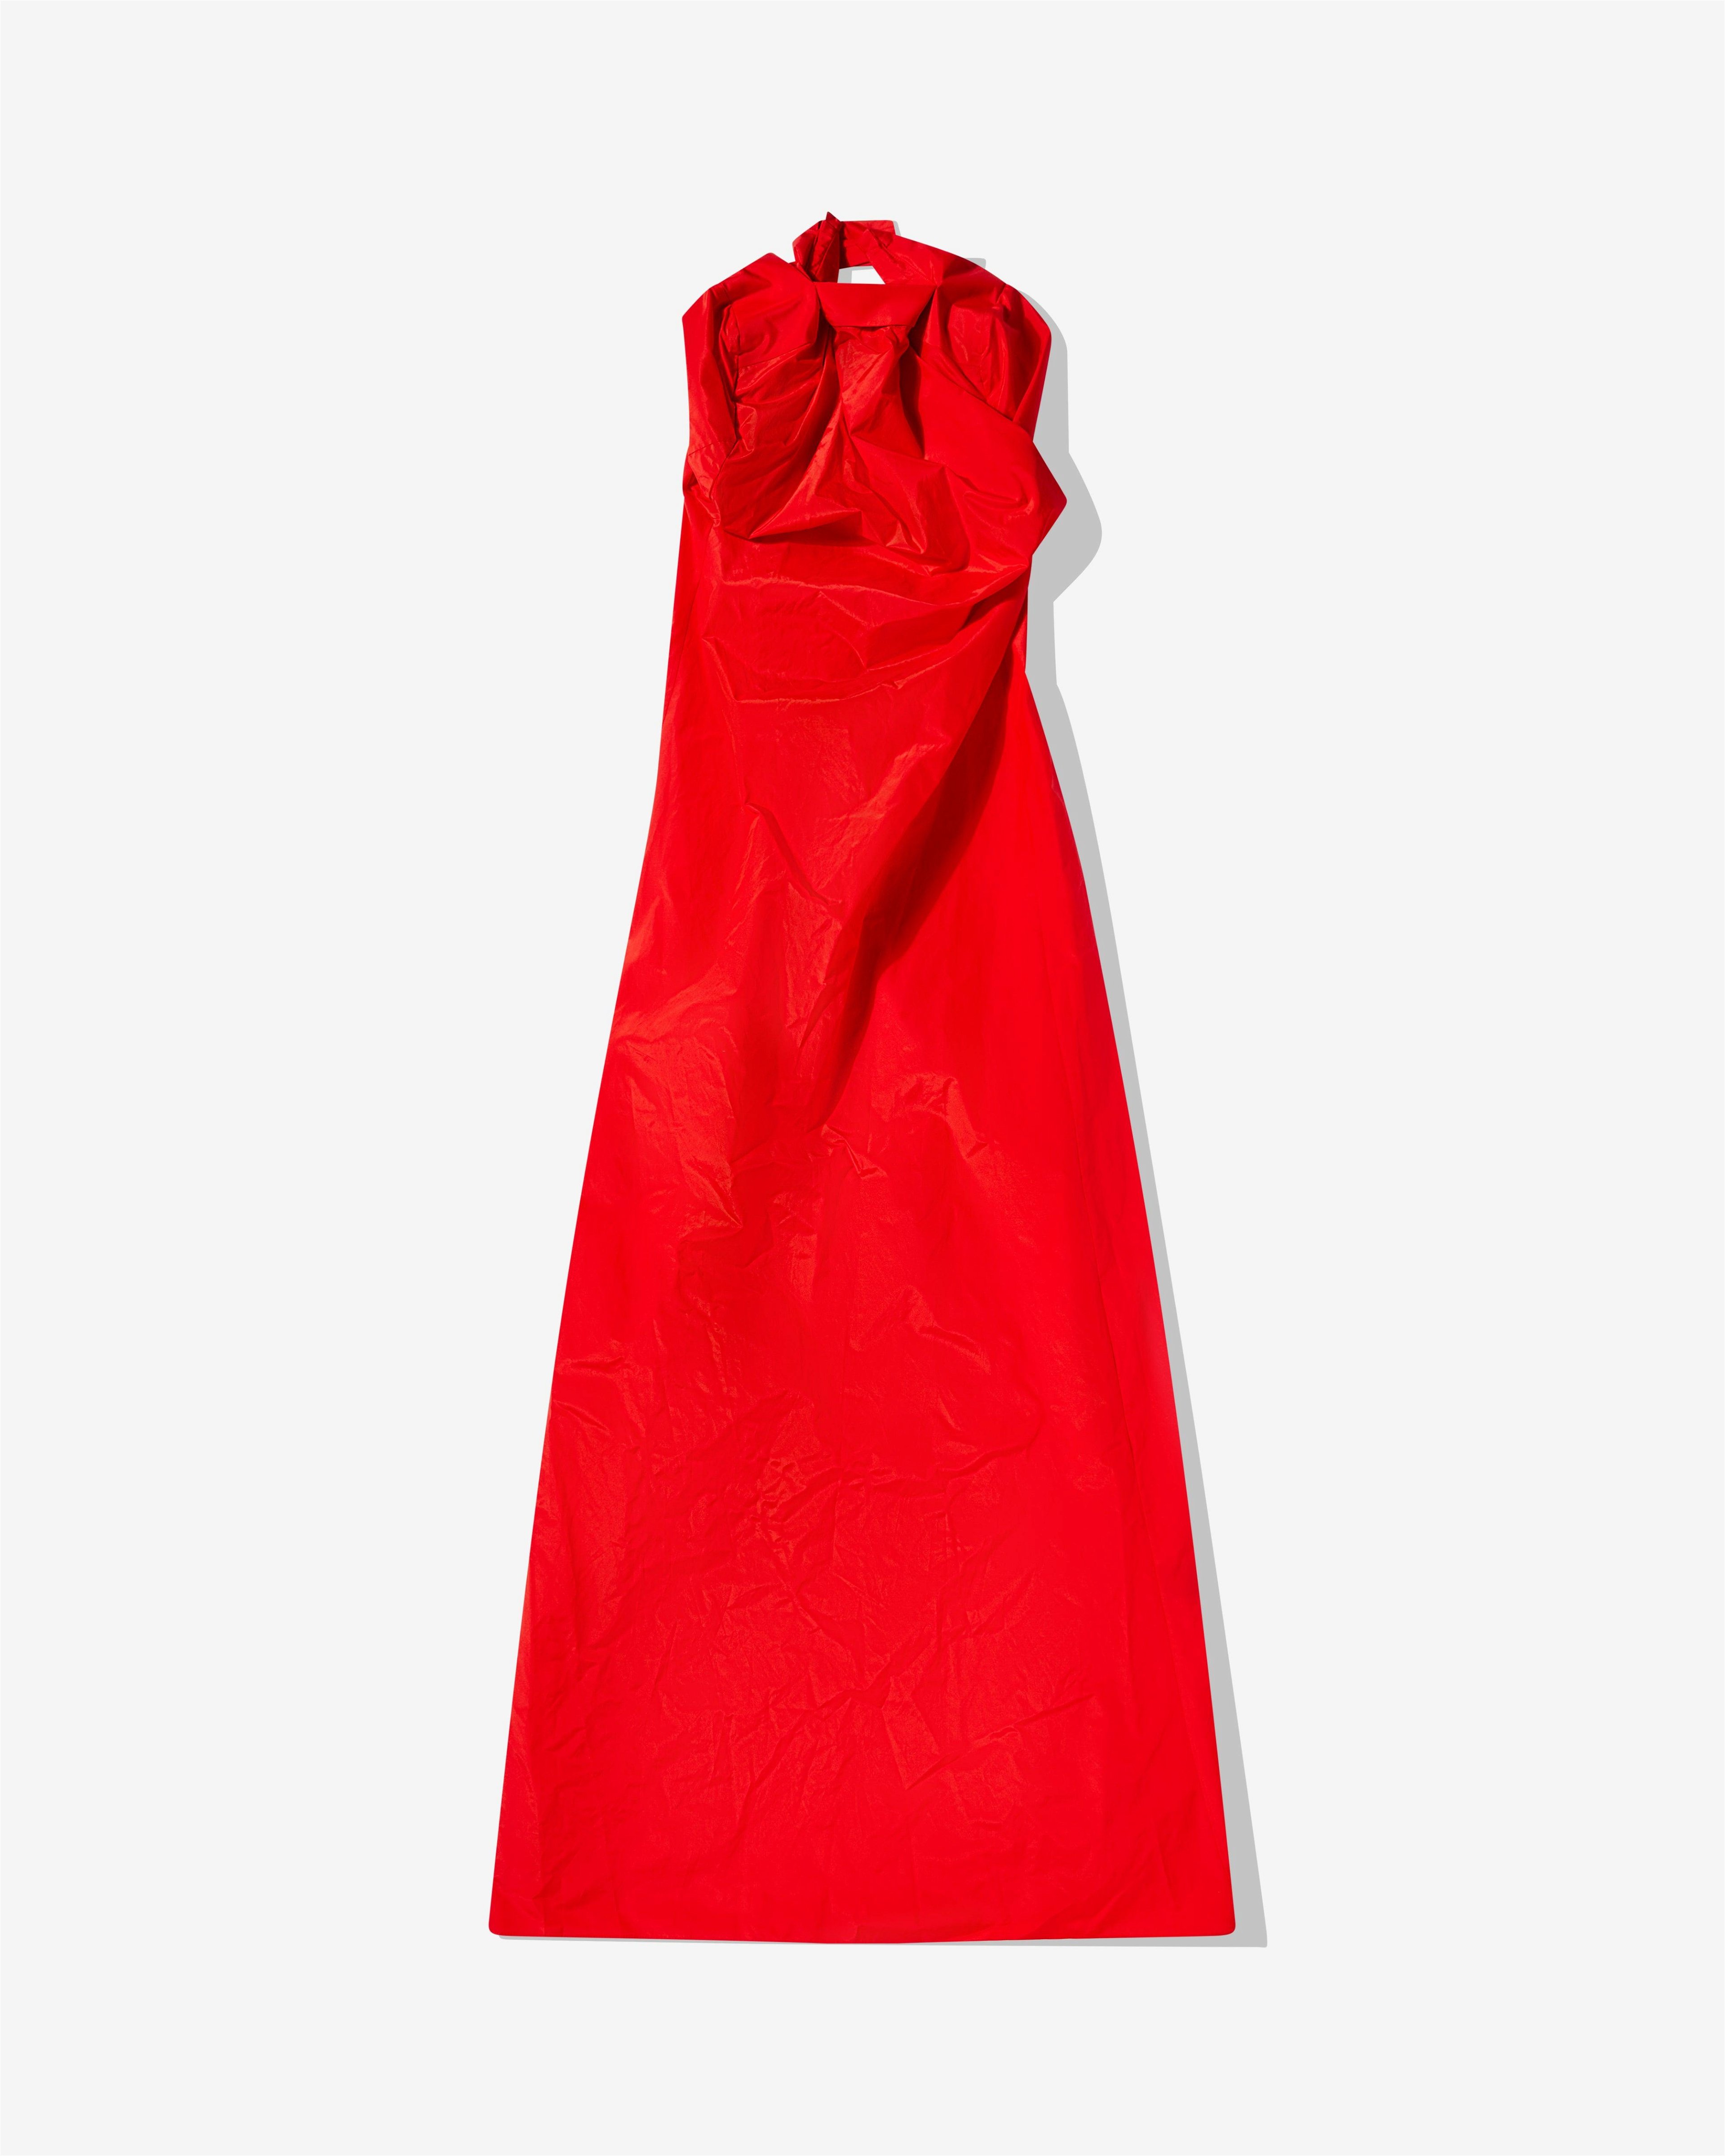 Torisheju - Women's 21 Horned Dress- (Red) by TORISHEJU